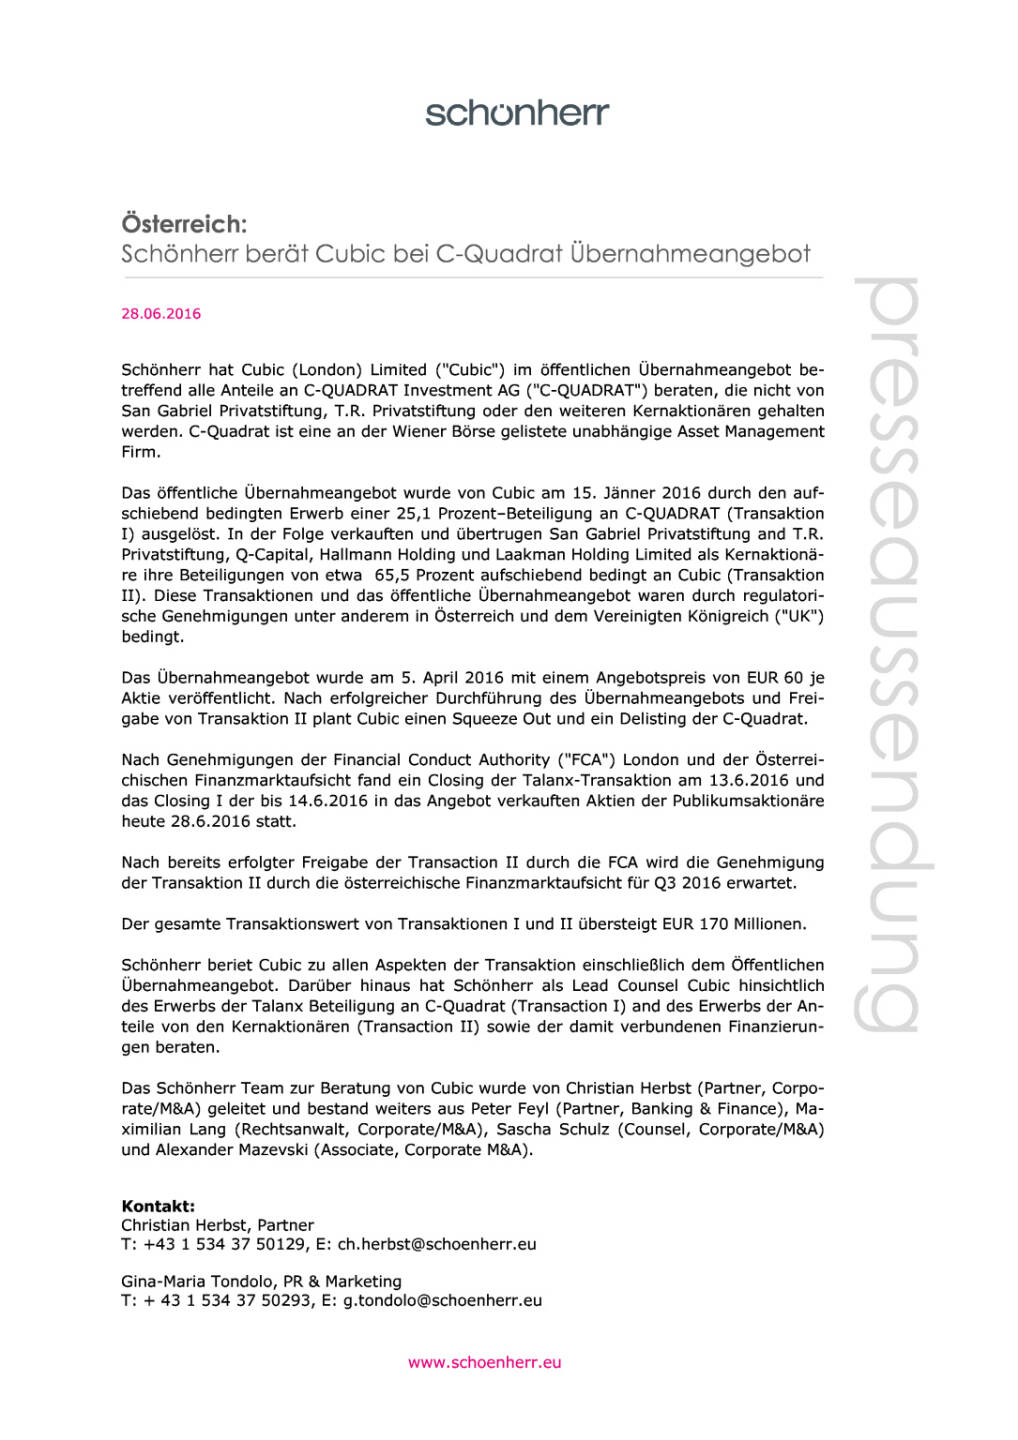 Schönherr berät Cubic bei C-Quadrat Übernahmeangebot, Seite 1/2, komplettes Dokument unter http://boerse-social.com/static/uploads/file_1285_schonherr_berat_cubic_bei_c-quadrat_ubernahmeangebot.pdf